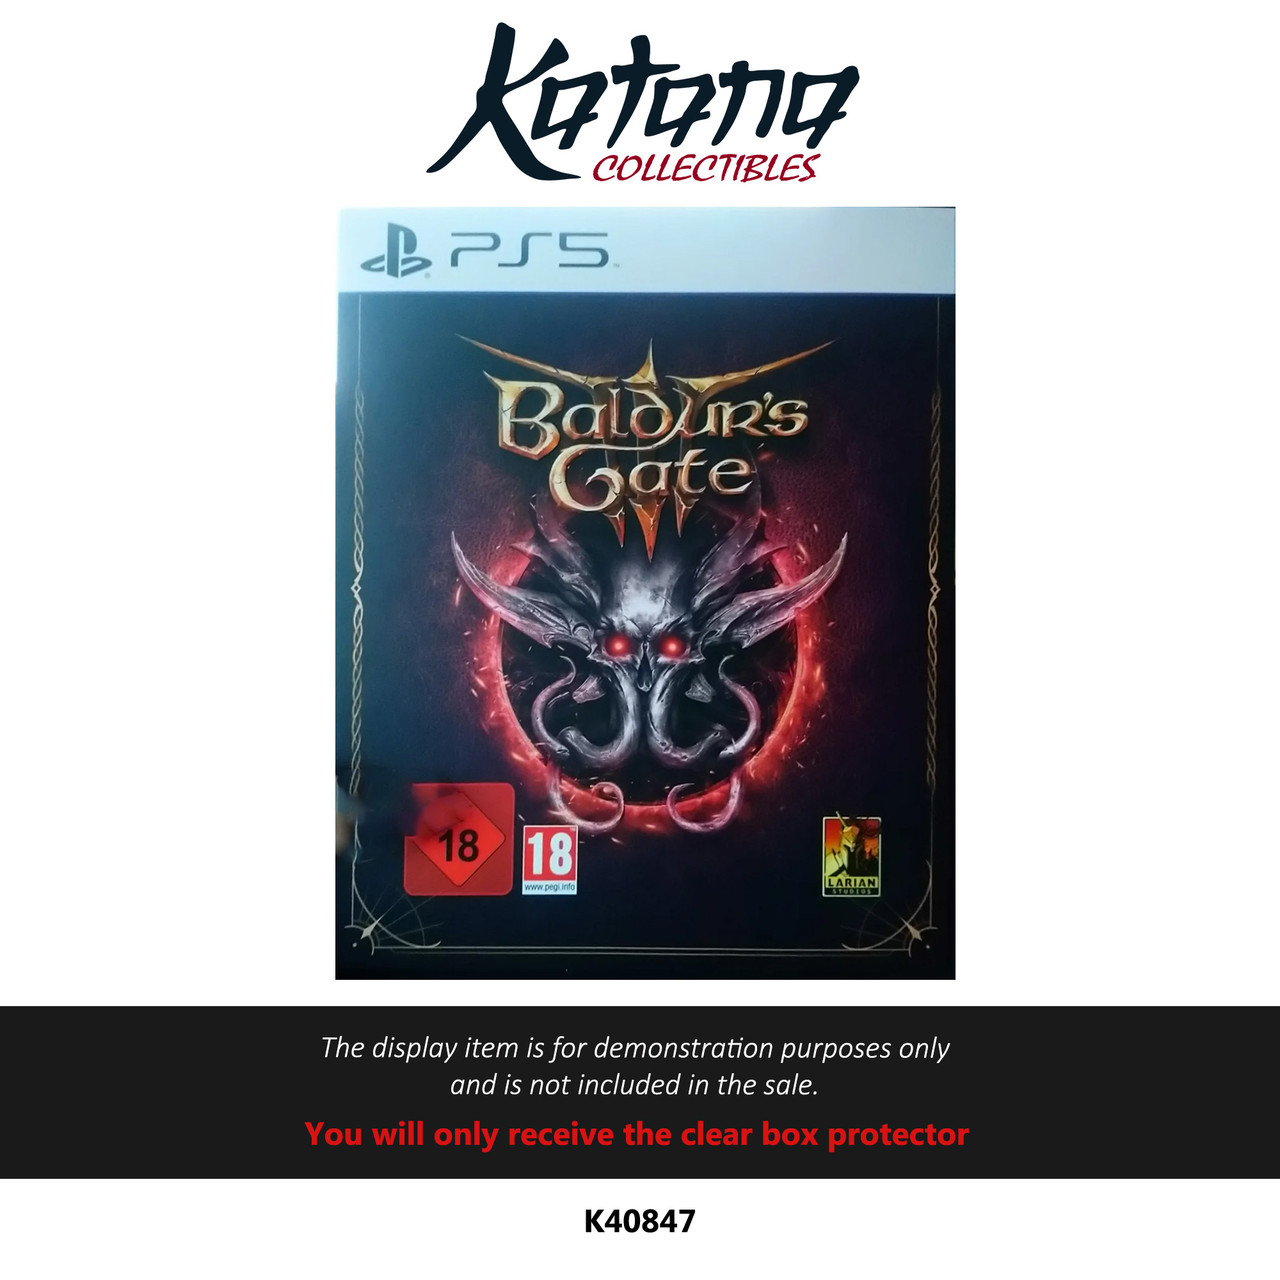 Katana Collectibles Protector For Baldur's Gate 3 (PS5) European Version